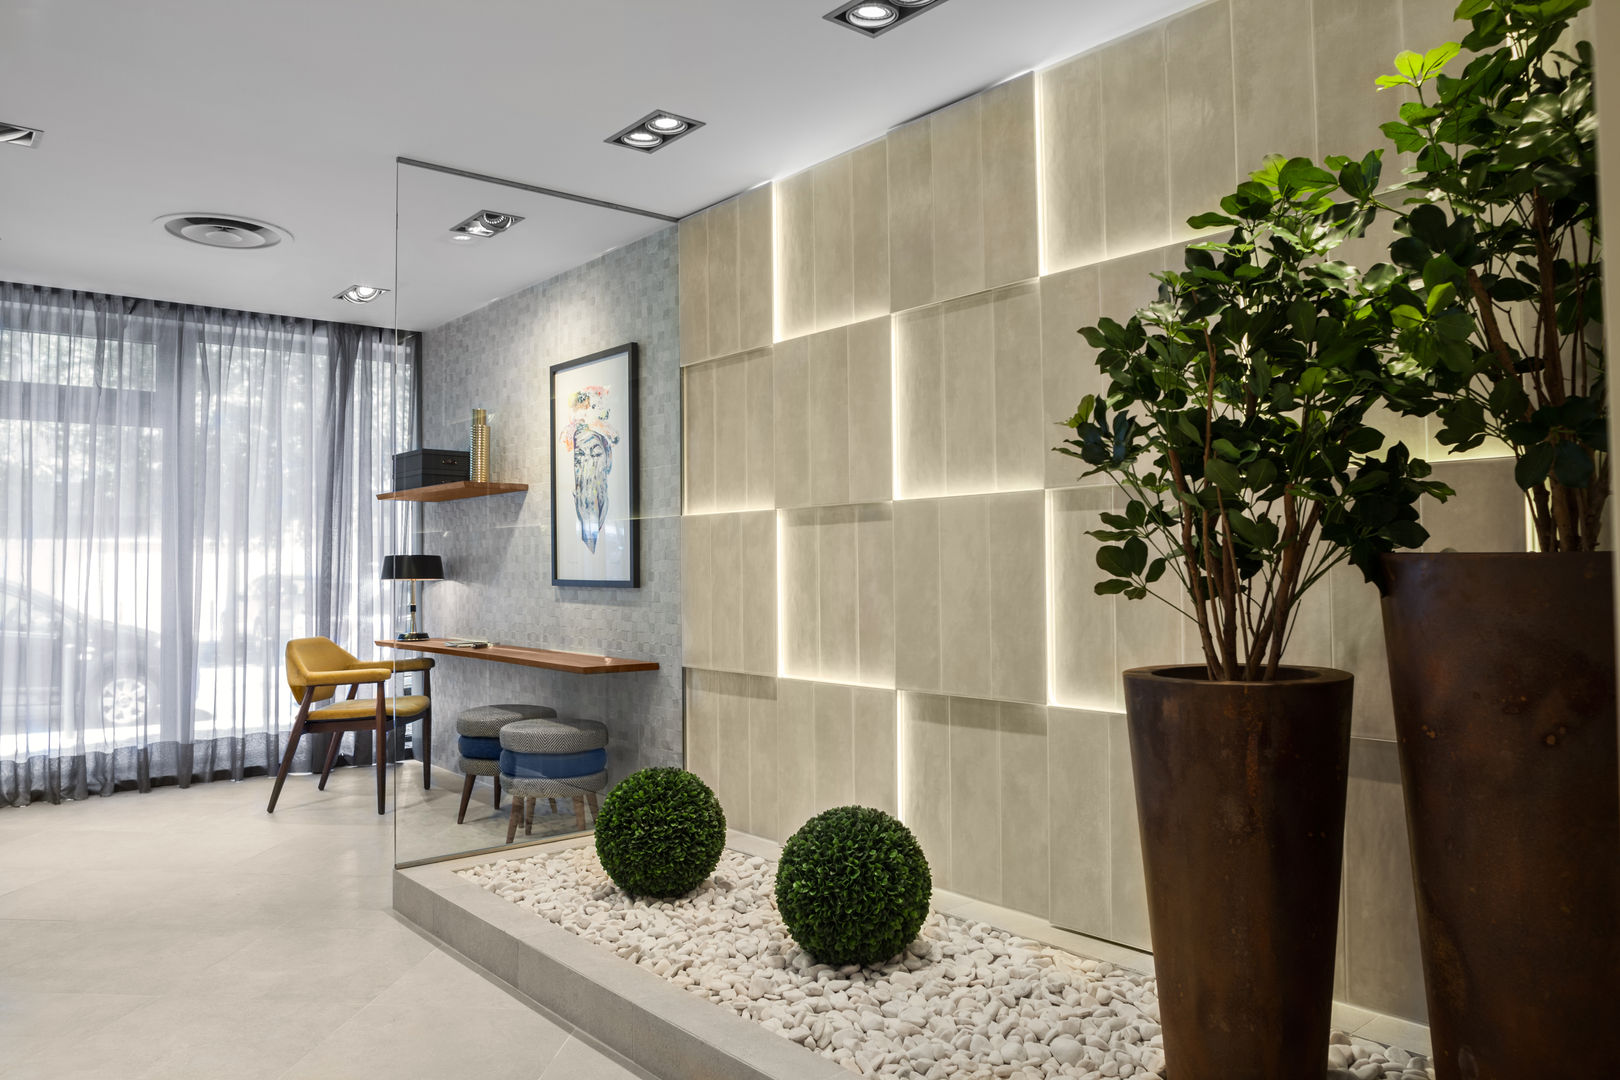 Showroom Love Tiles 2015- Espaço residencial, Rita Glória Interior Design unipessoal LDA Rita Glória Interior Design unipessoal LDA พื้นที่เชิงพาณิชย์ ศูนย์นิทรรศการ